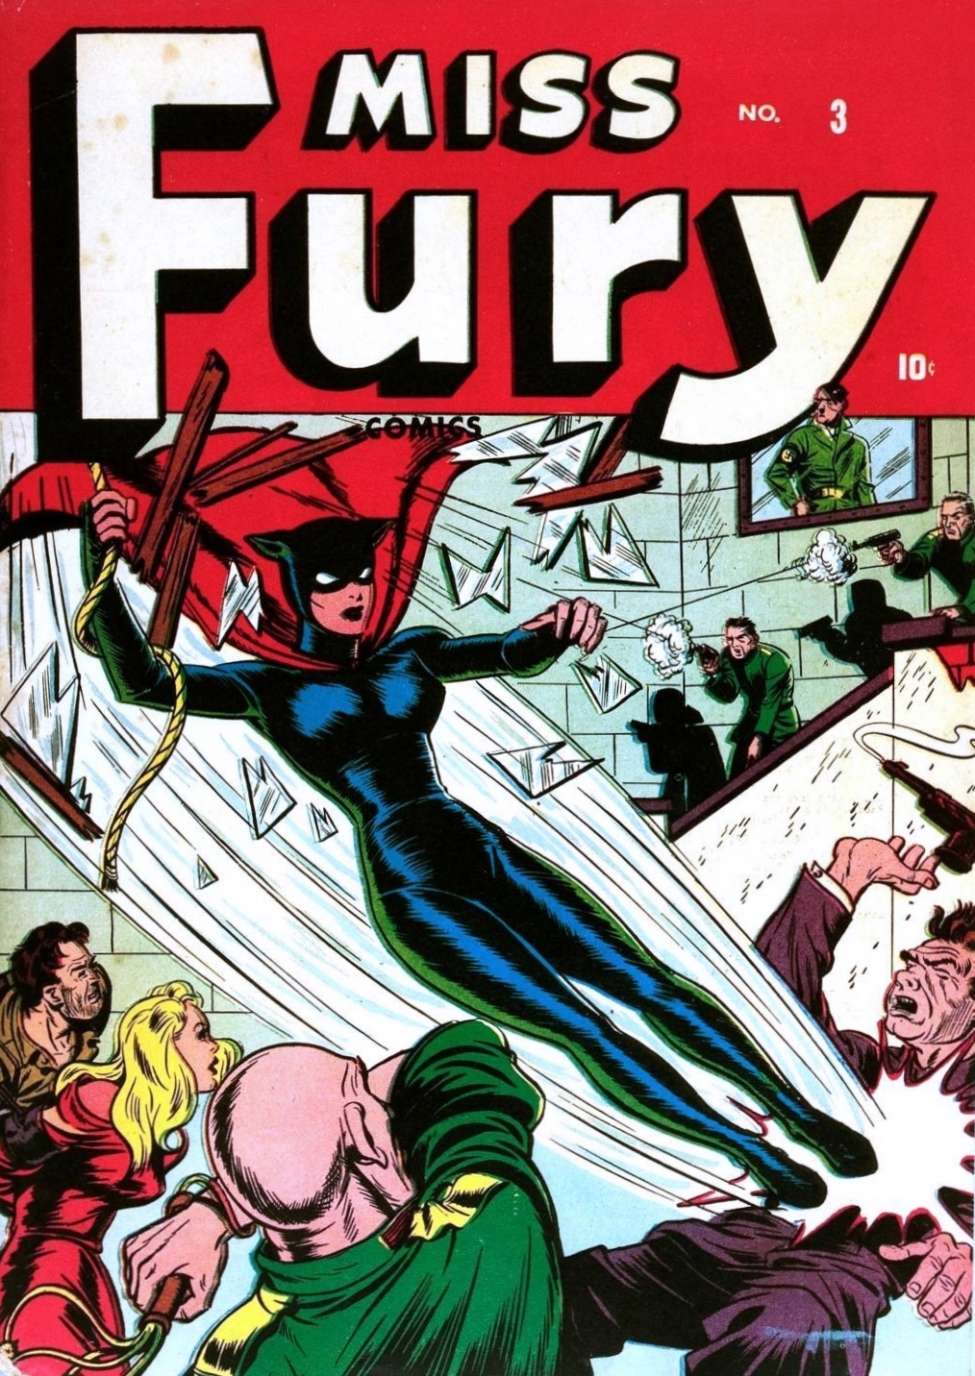 Miss Fury #3, by Medallion Publishing